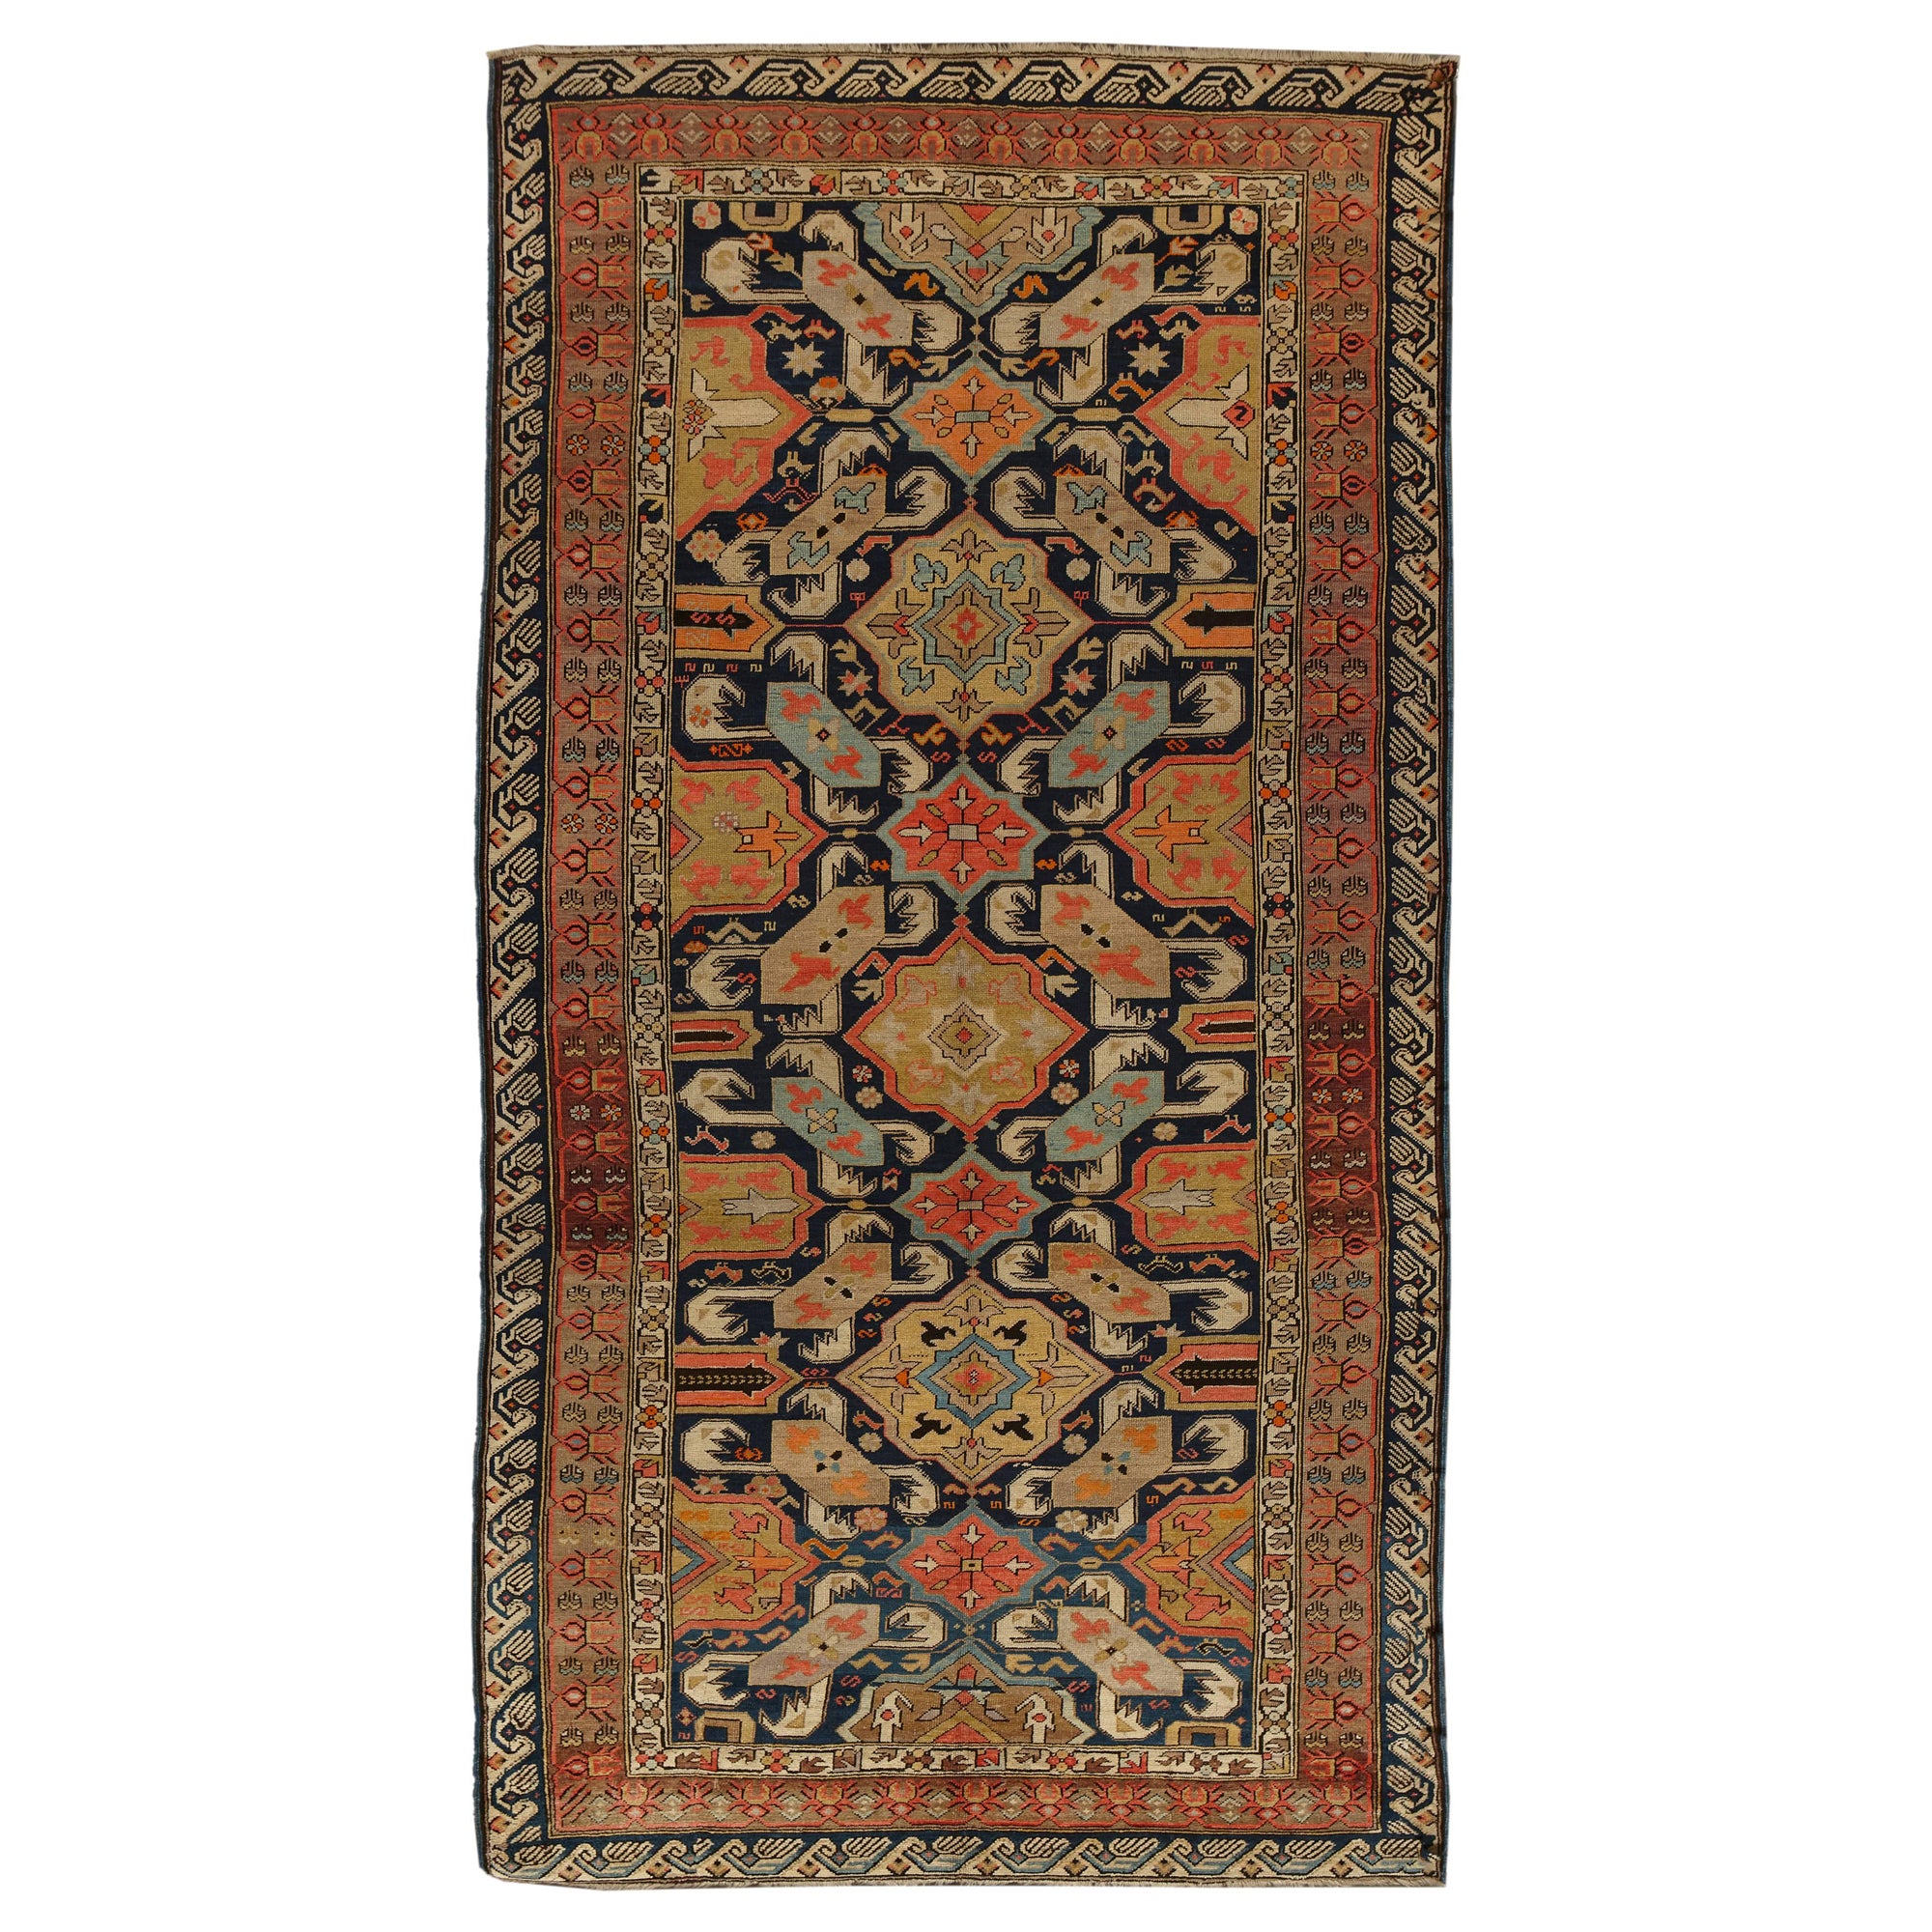 19th Century Rare Karabagh Gallery Carpet